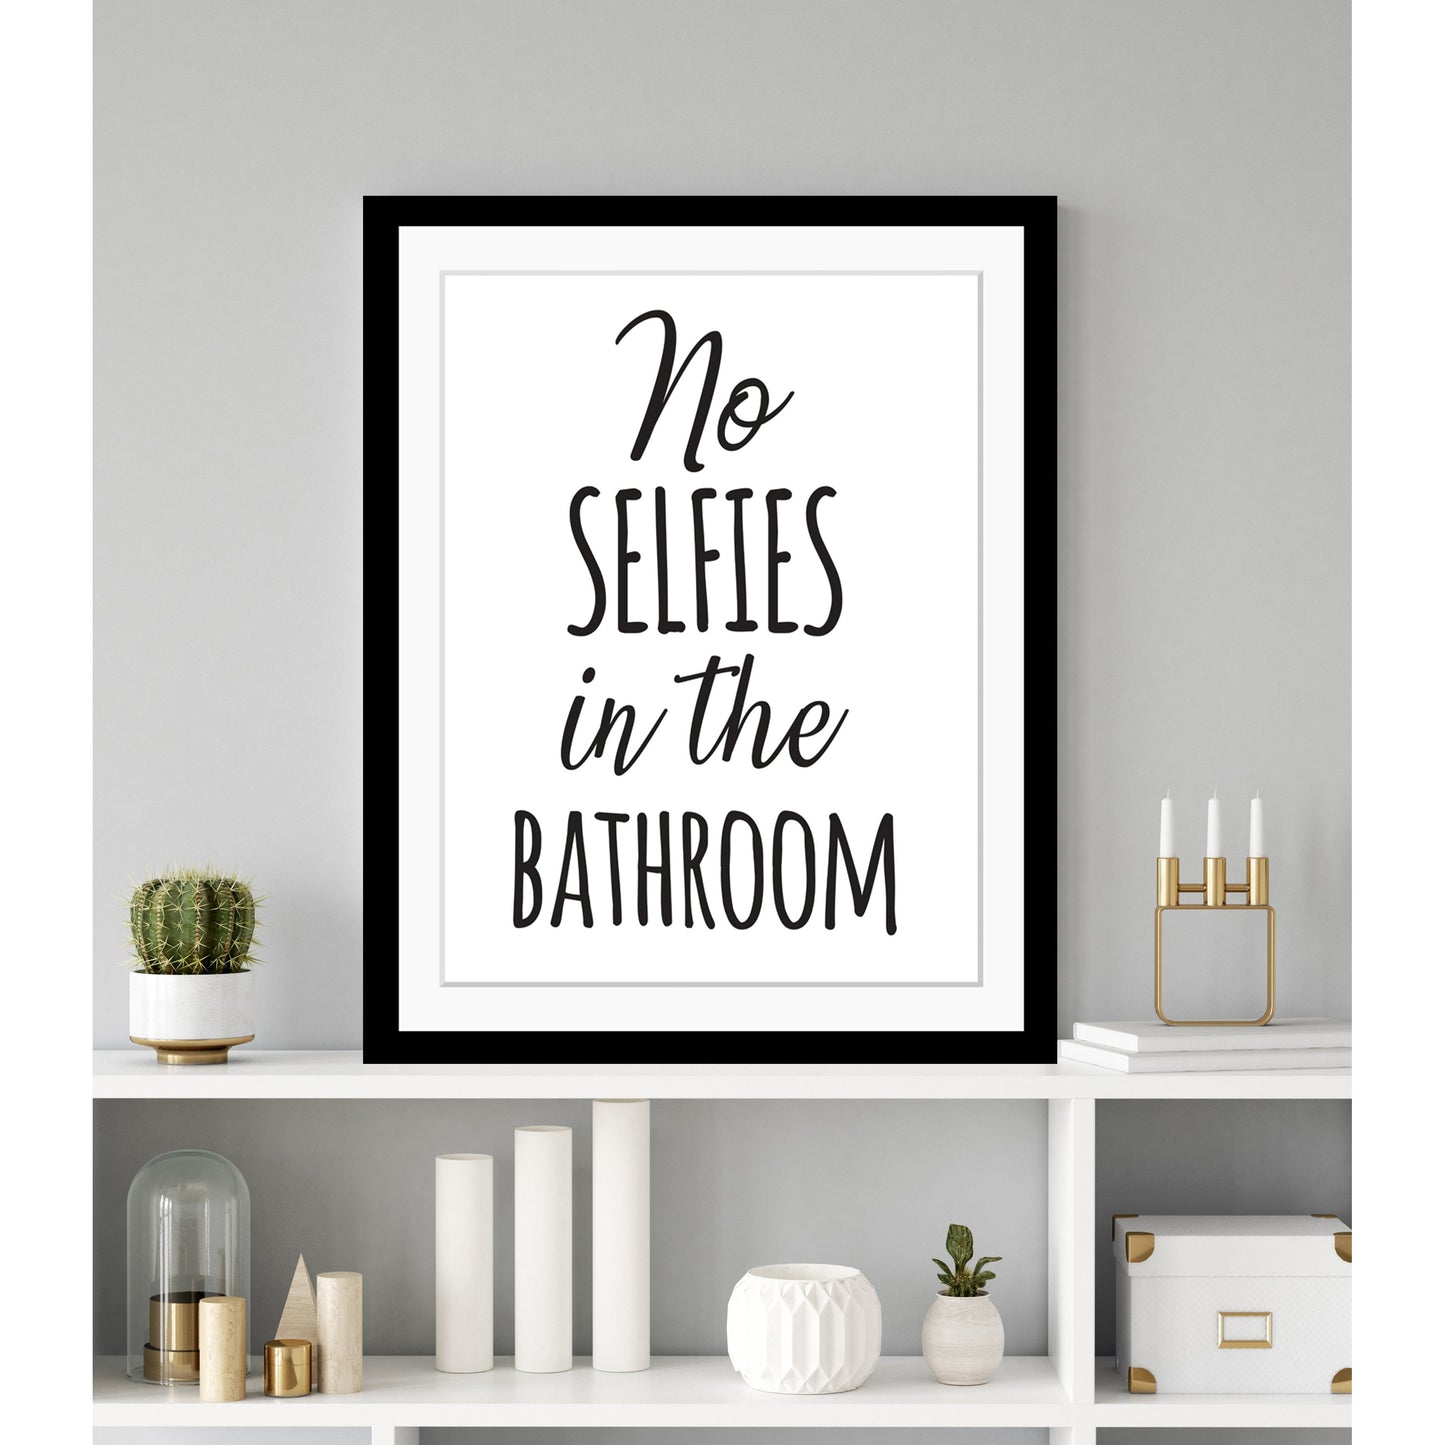 Rahmenbild - No Selfies In The Bathroom Wohnbeispiel